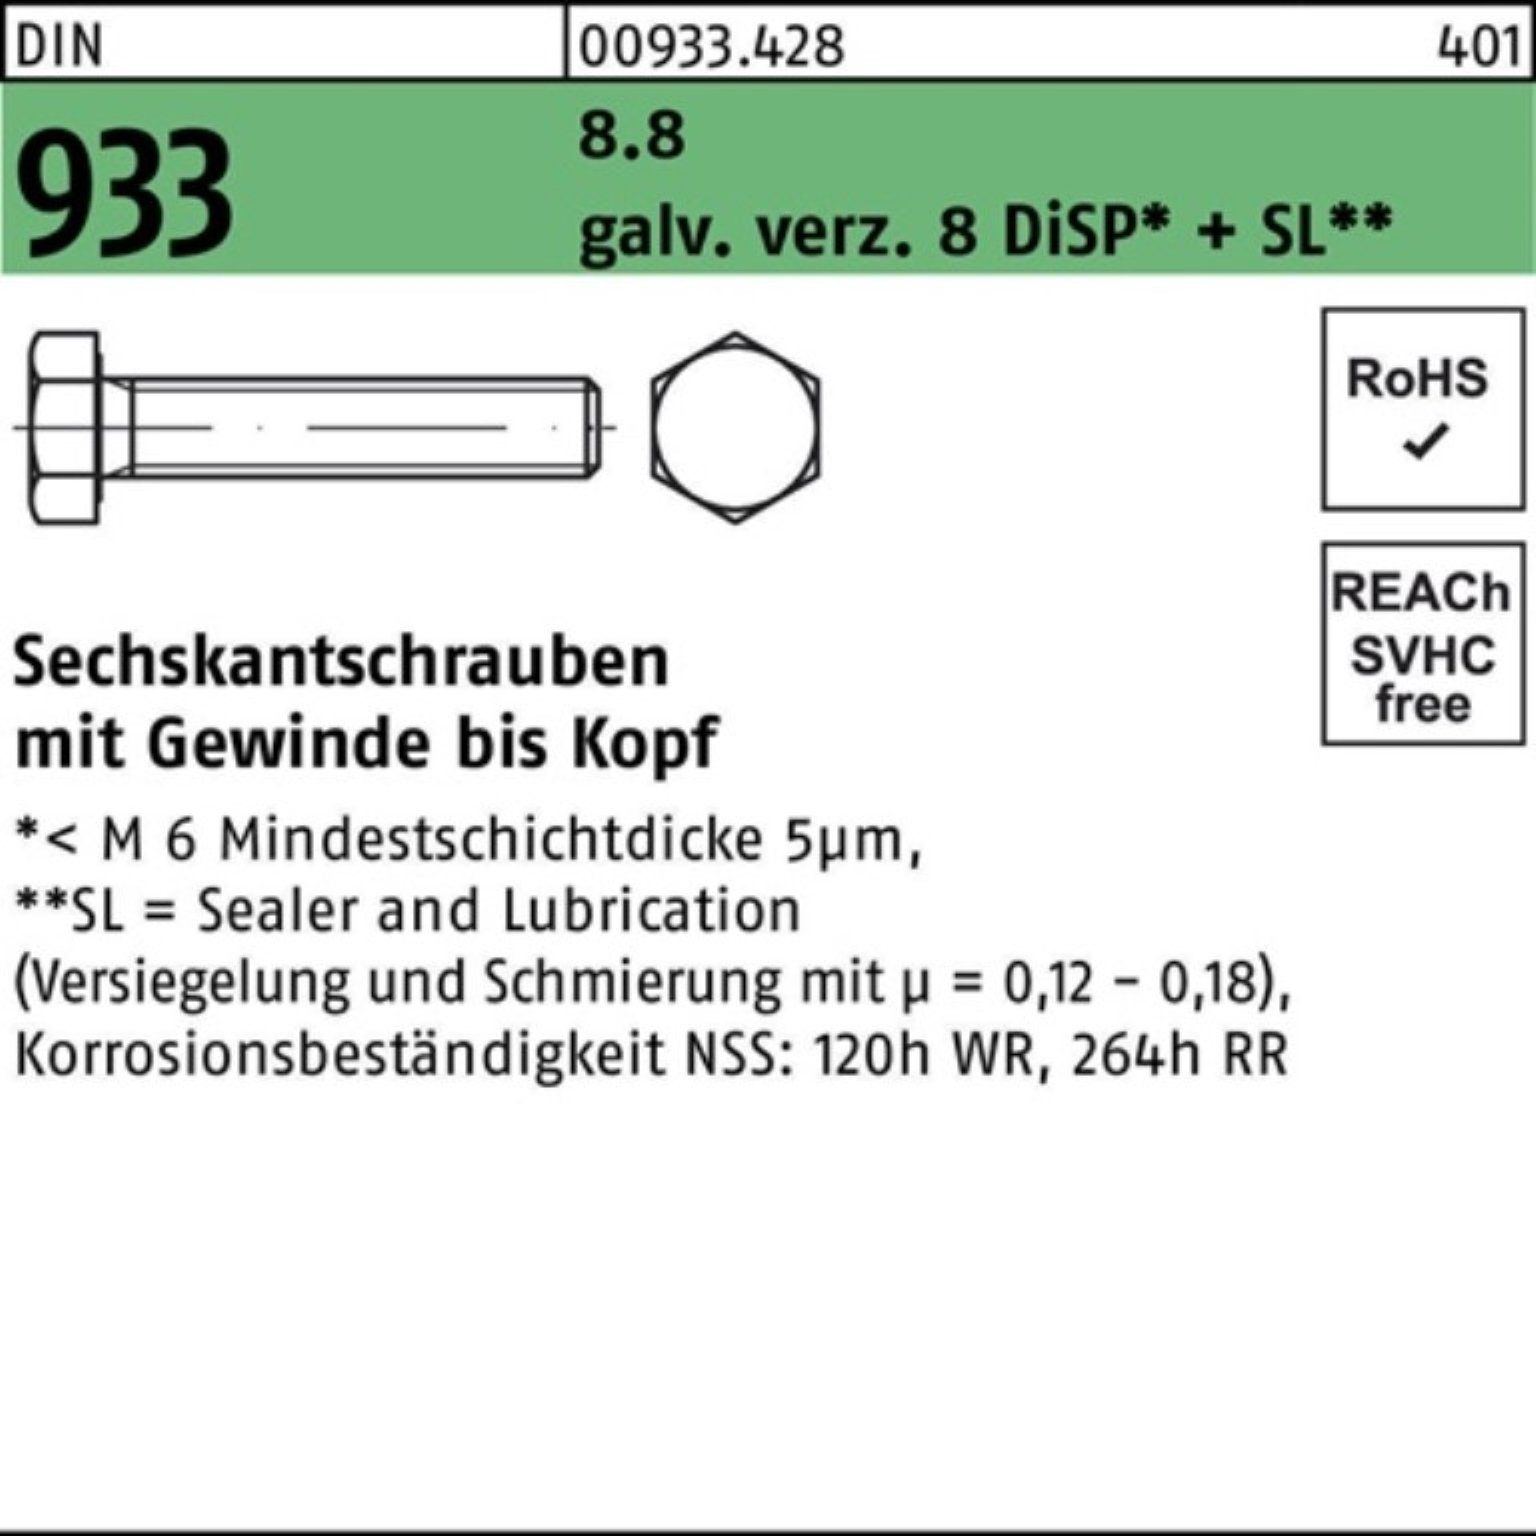 gal Sechskantschraube Sechskantschraube 75 Pack 100er DIN 8 Zn 933 + SL DiSP Reyher VG M24x 8.8